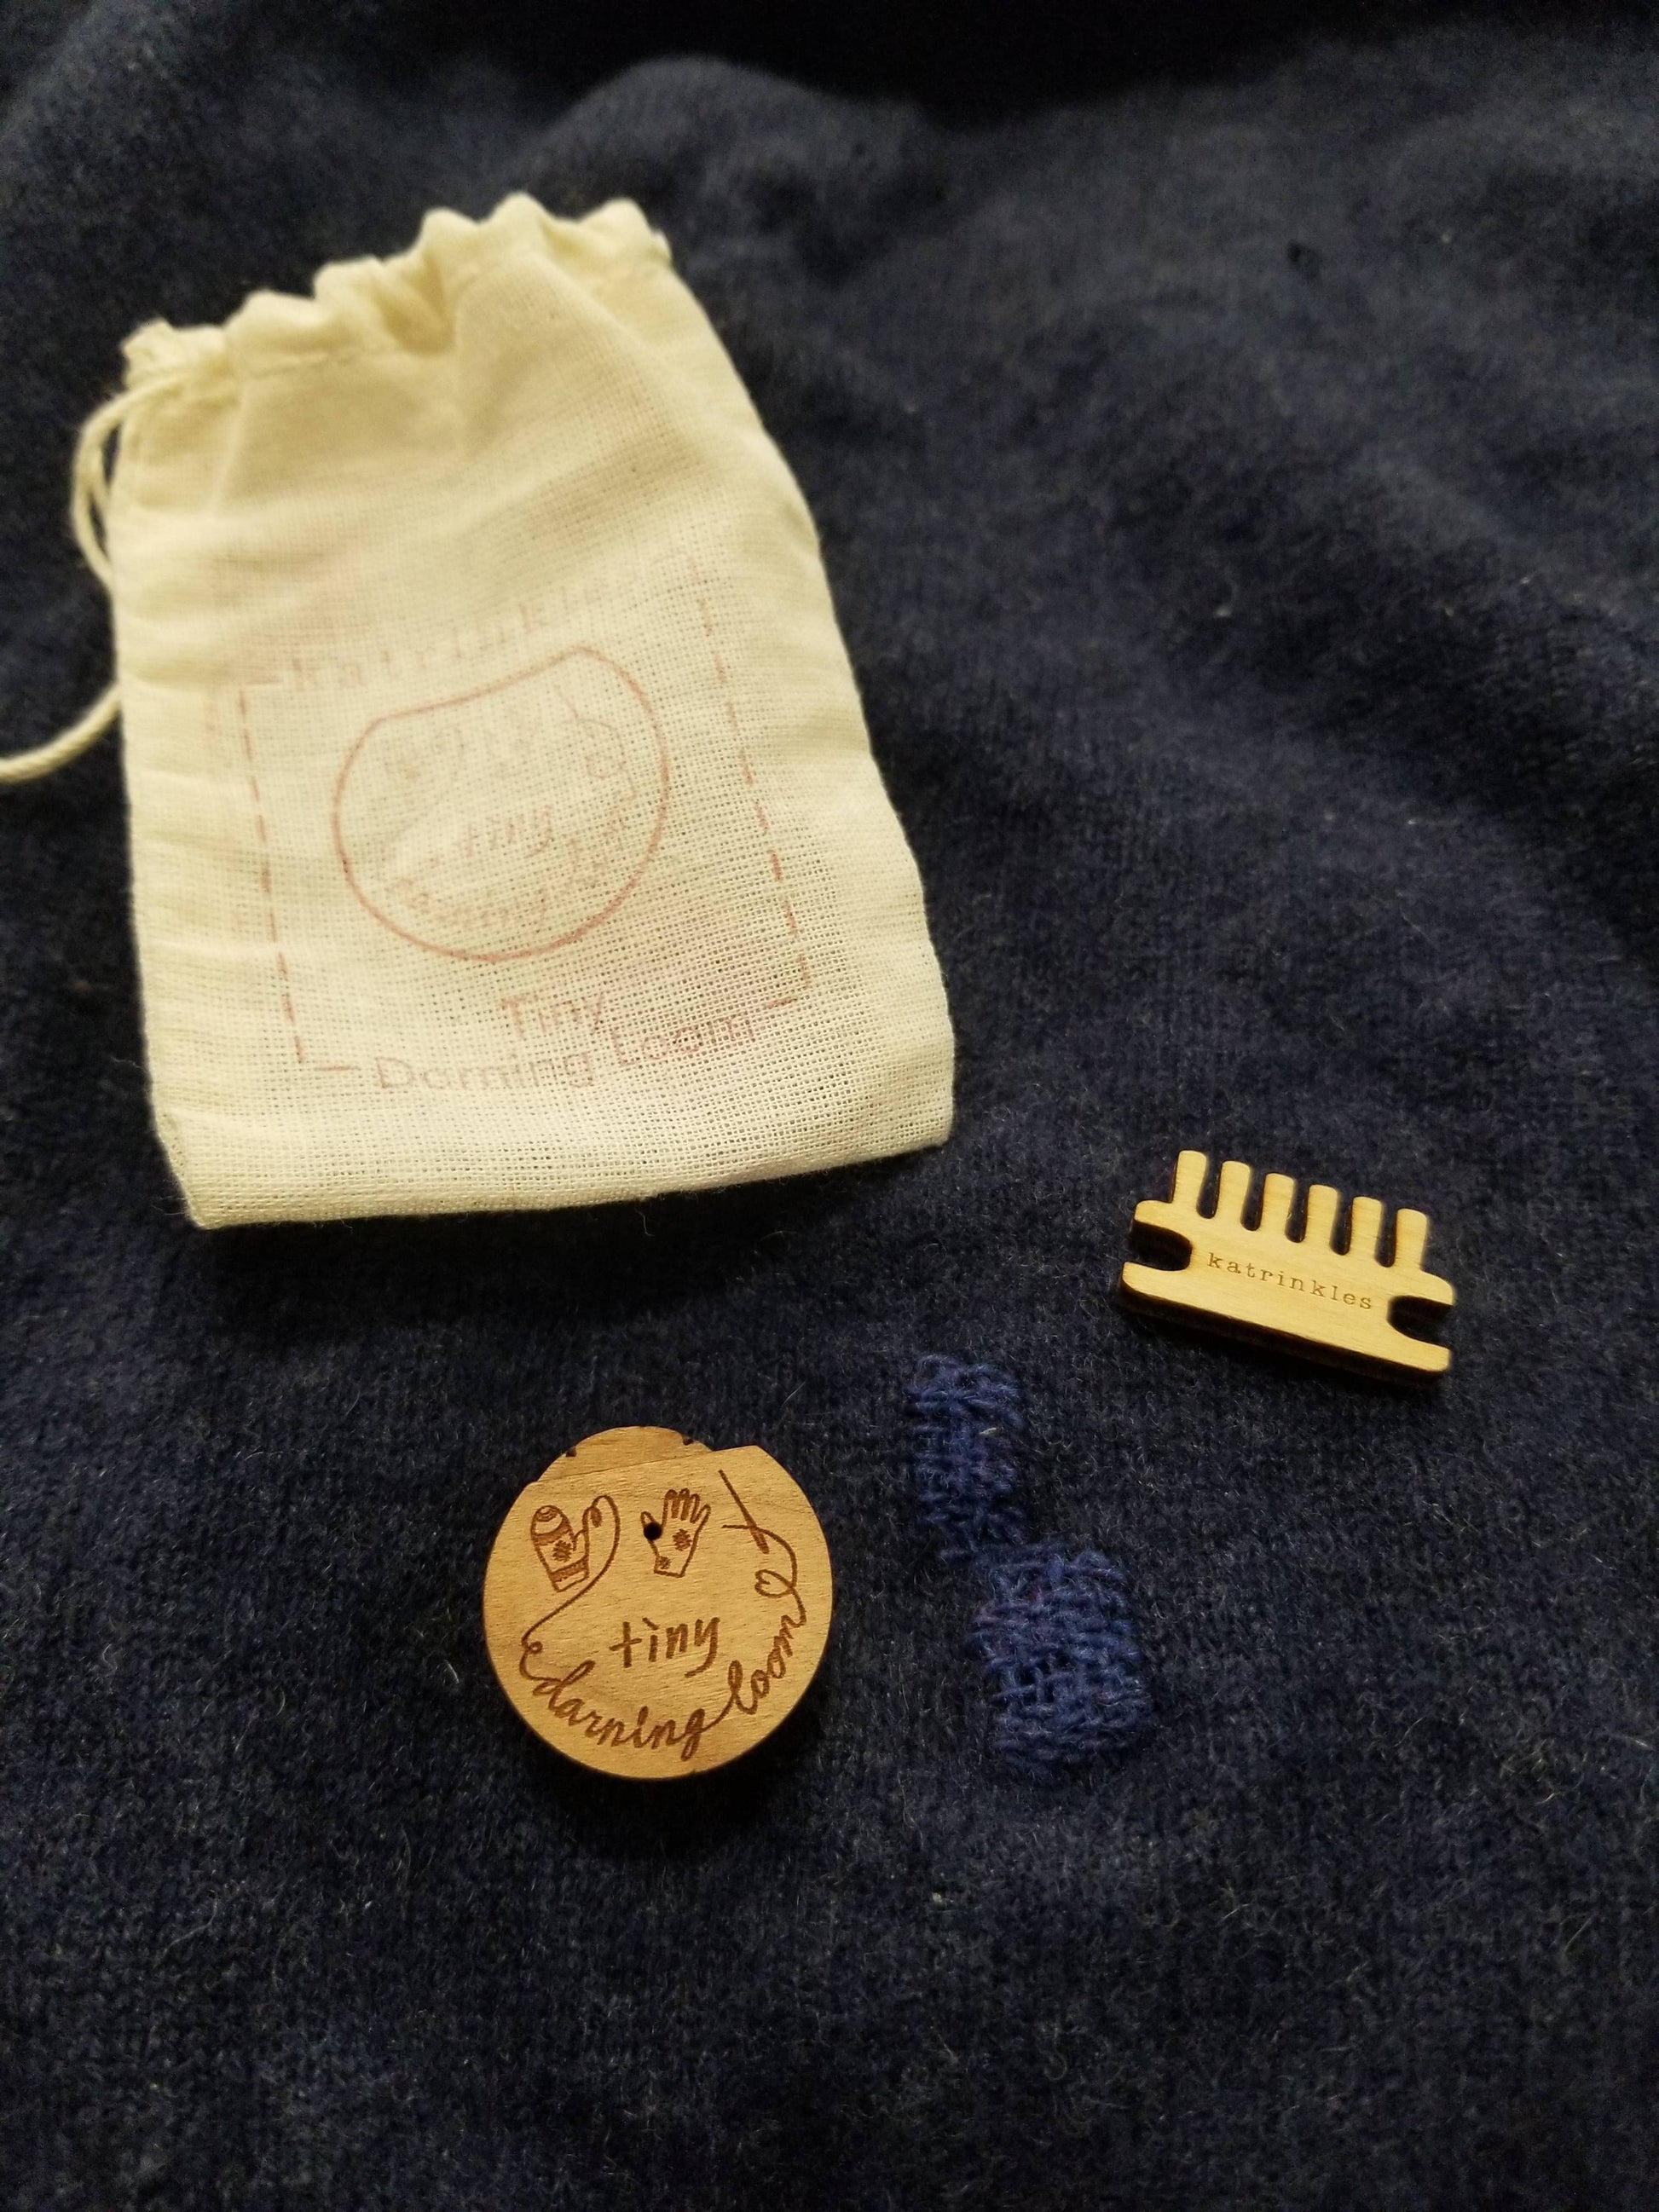 Katrinkles - Tiny Darning Loom: Tiny Darning Loom Kit - $18 Katrinkles